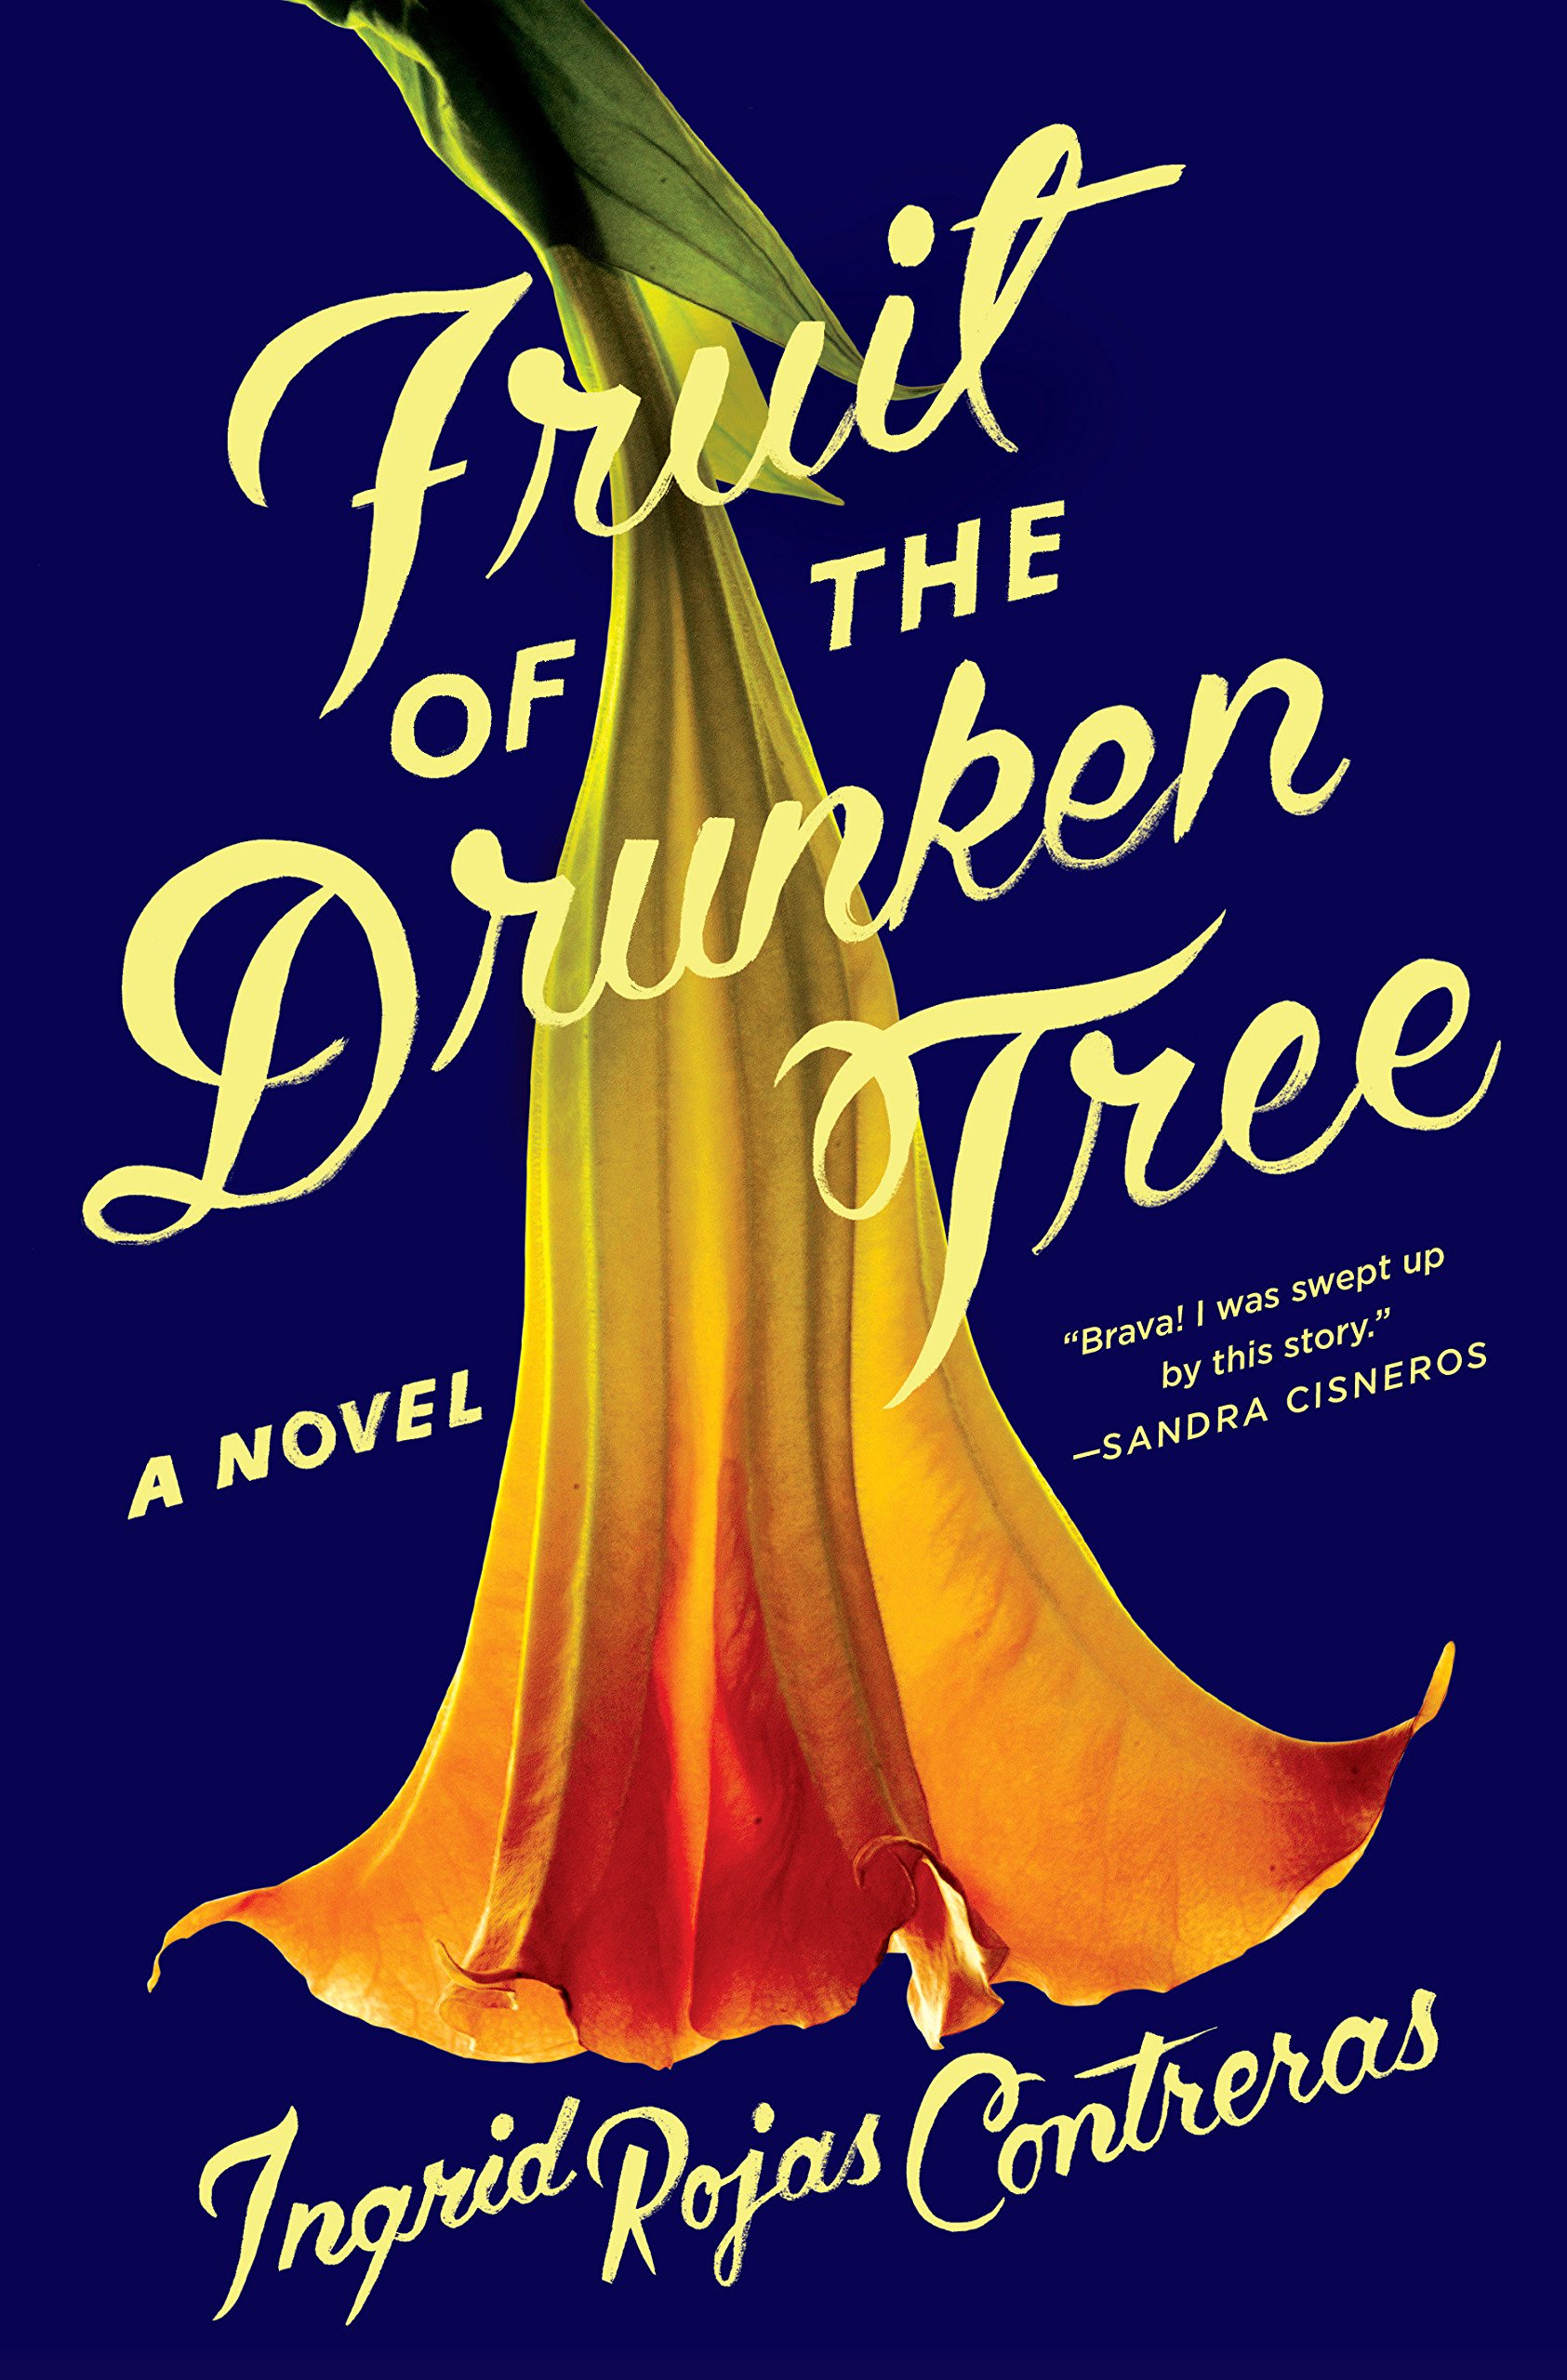 Fruit of the Drunken Tree by Ingrid Rojas Contreras